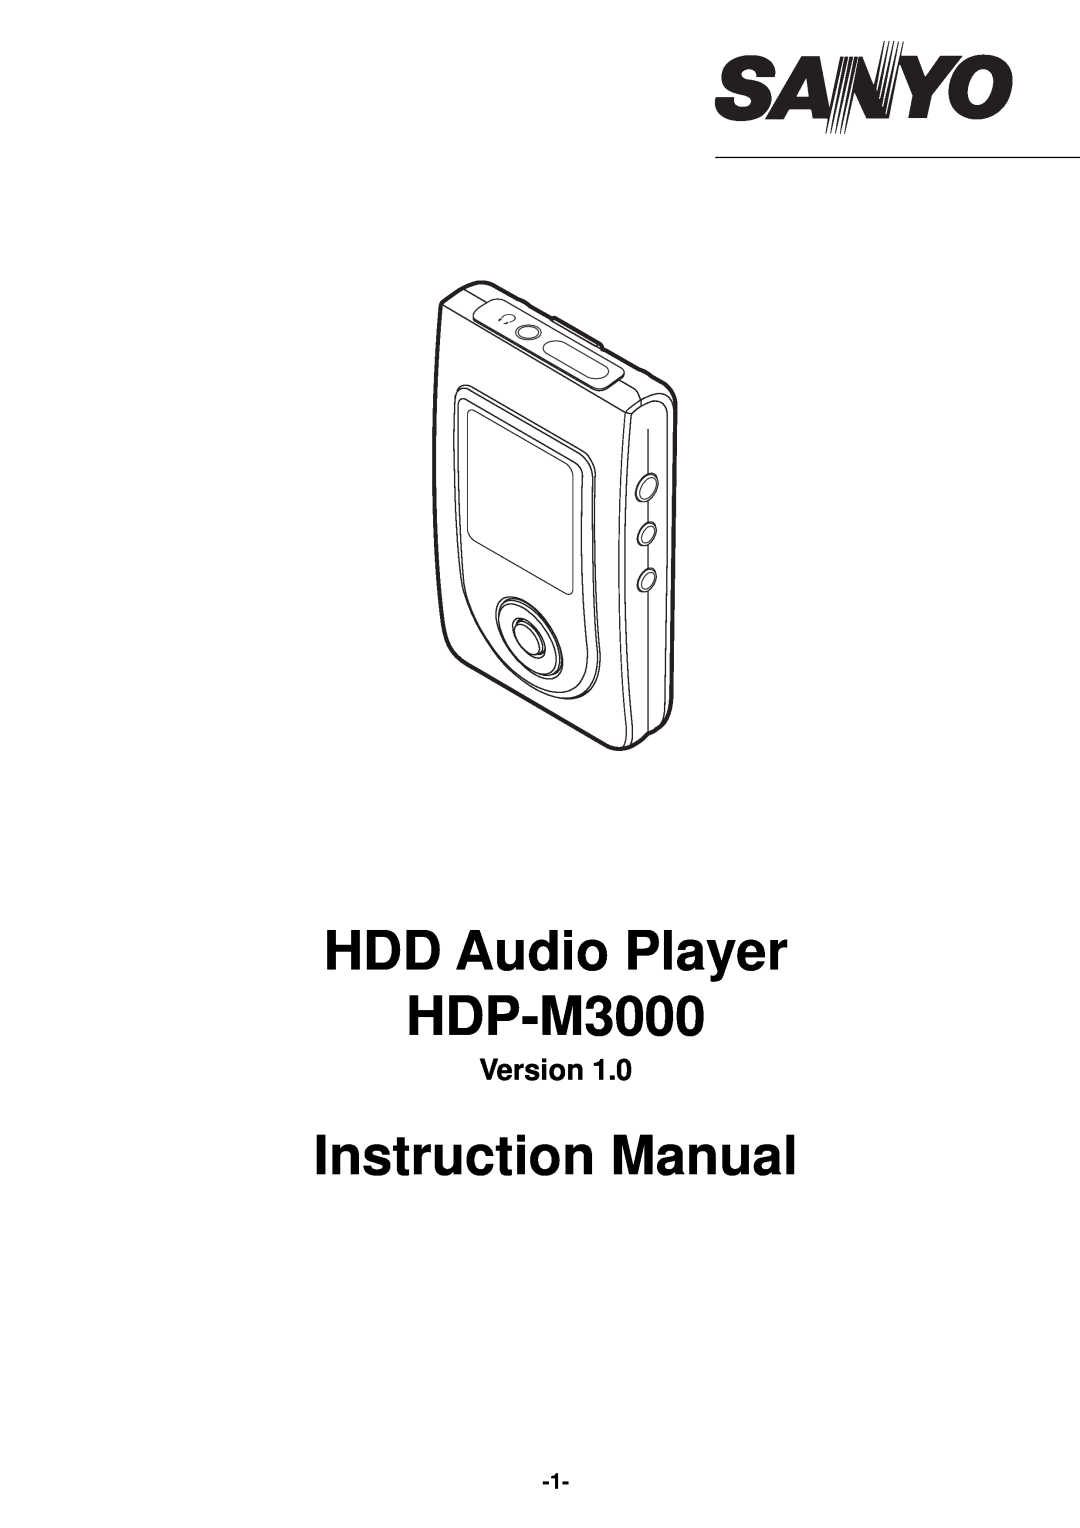 Sanyo instruction manual Version, HDD Audio Player HDP-M3000, Instruction Manual 